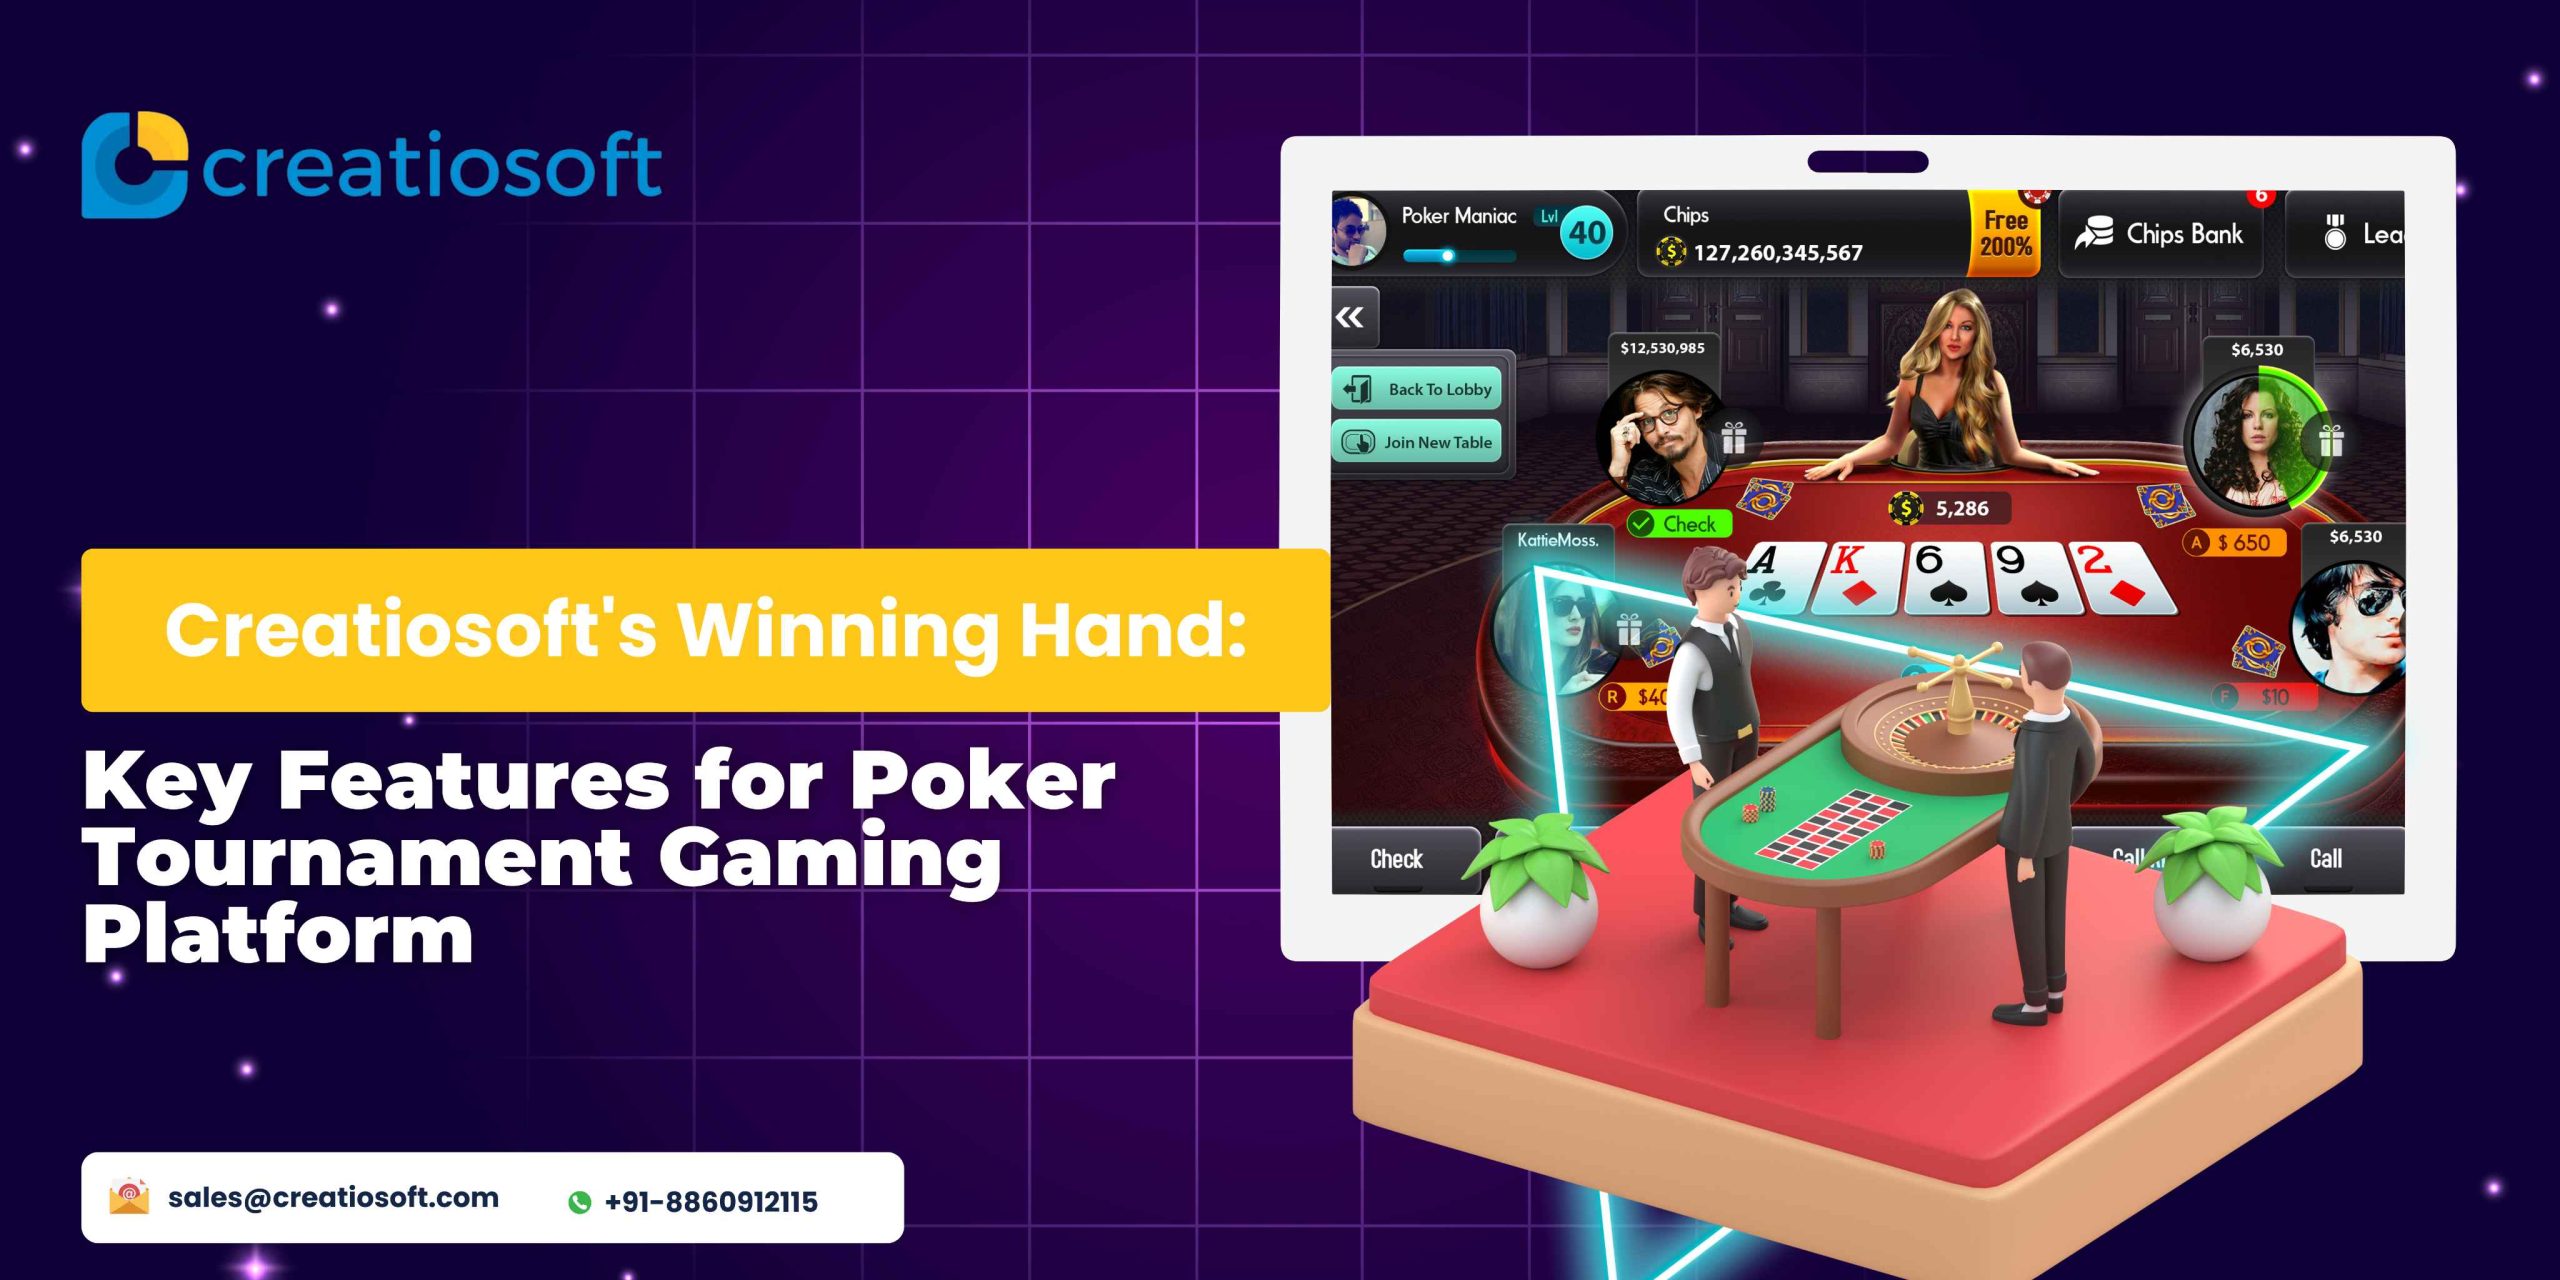 Poker Tournament Gaming Platform Key Features | Creatiosoft